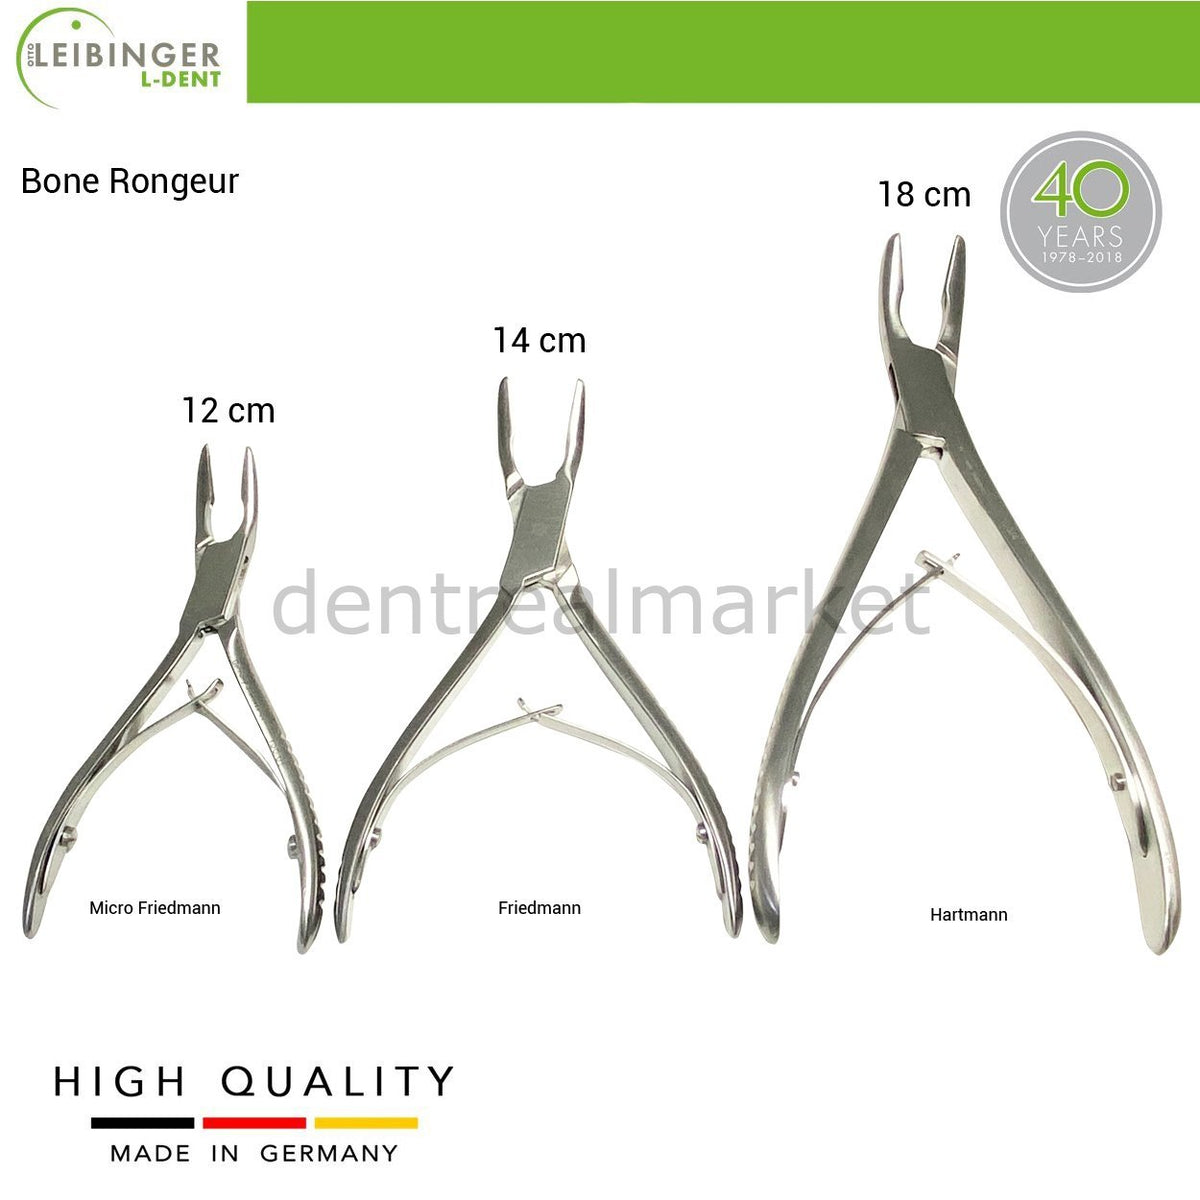 DentrealStore - Leibinger Friedmann Bone Rongeur Set - Surgery Bone Rongeur Set